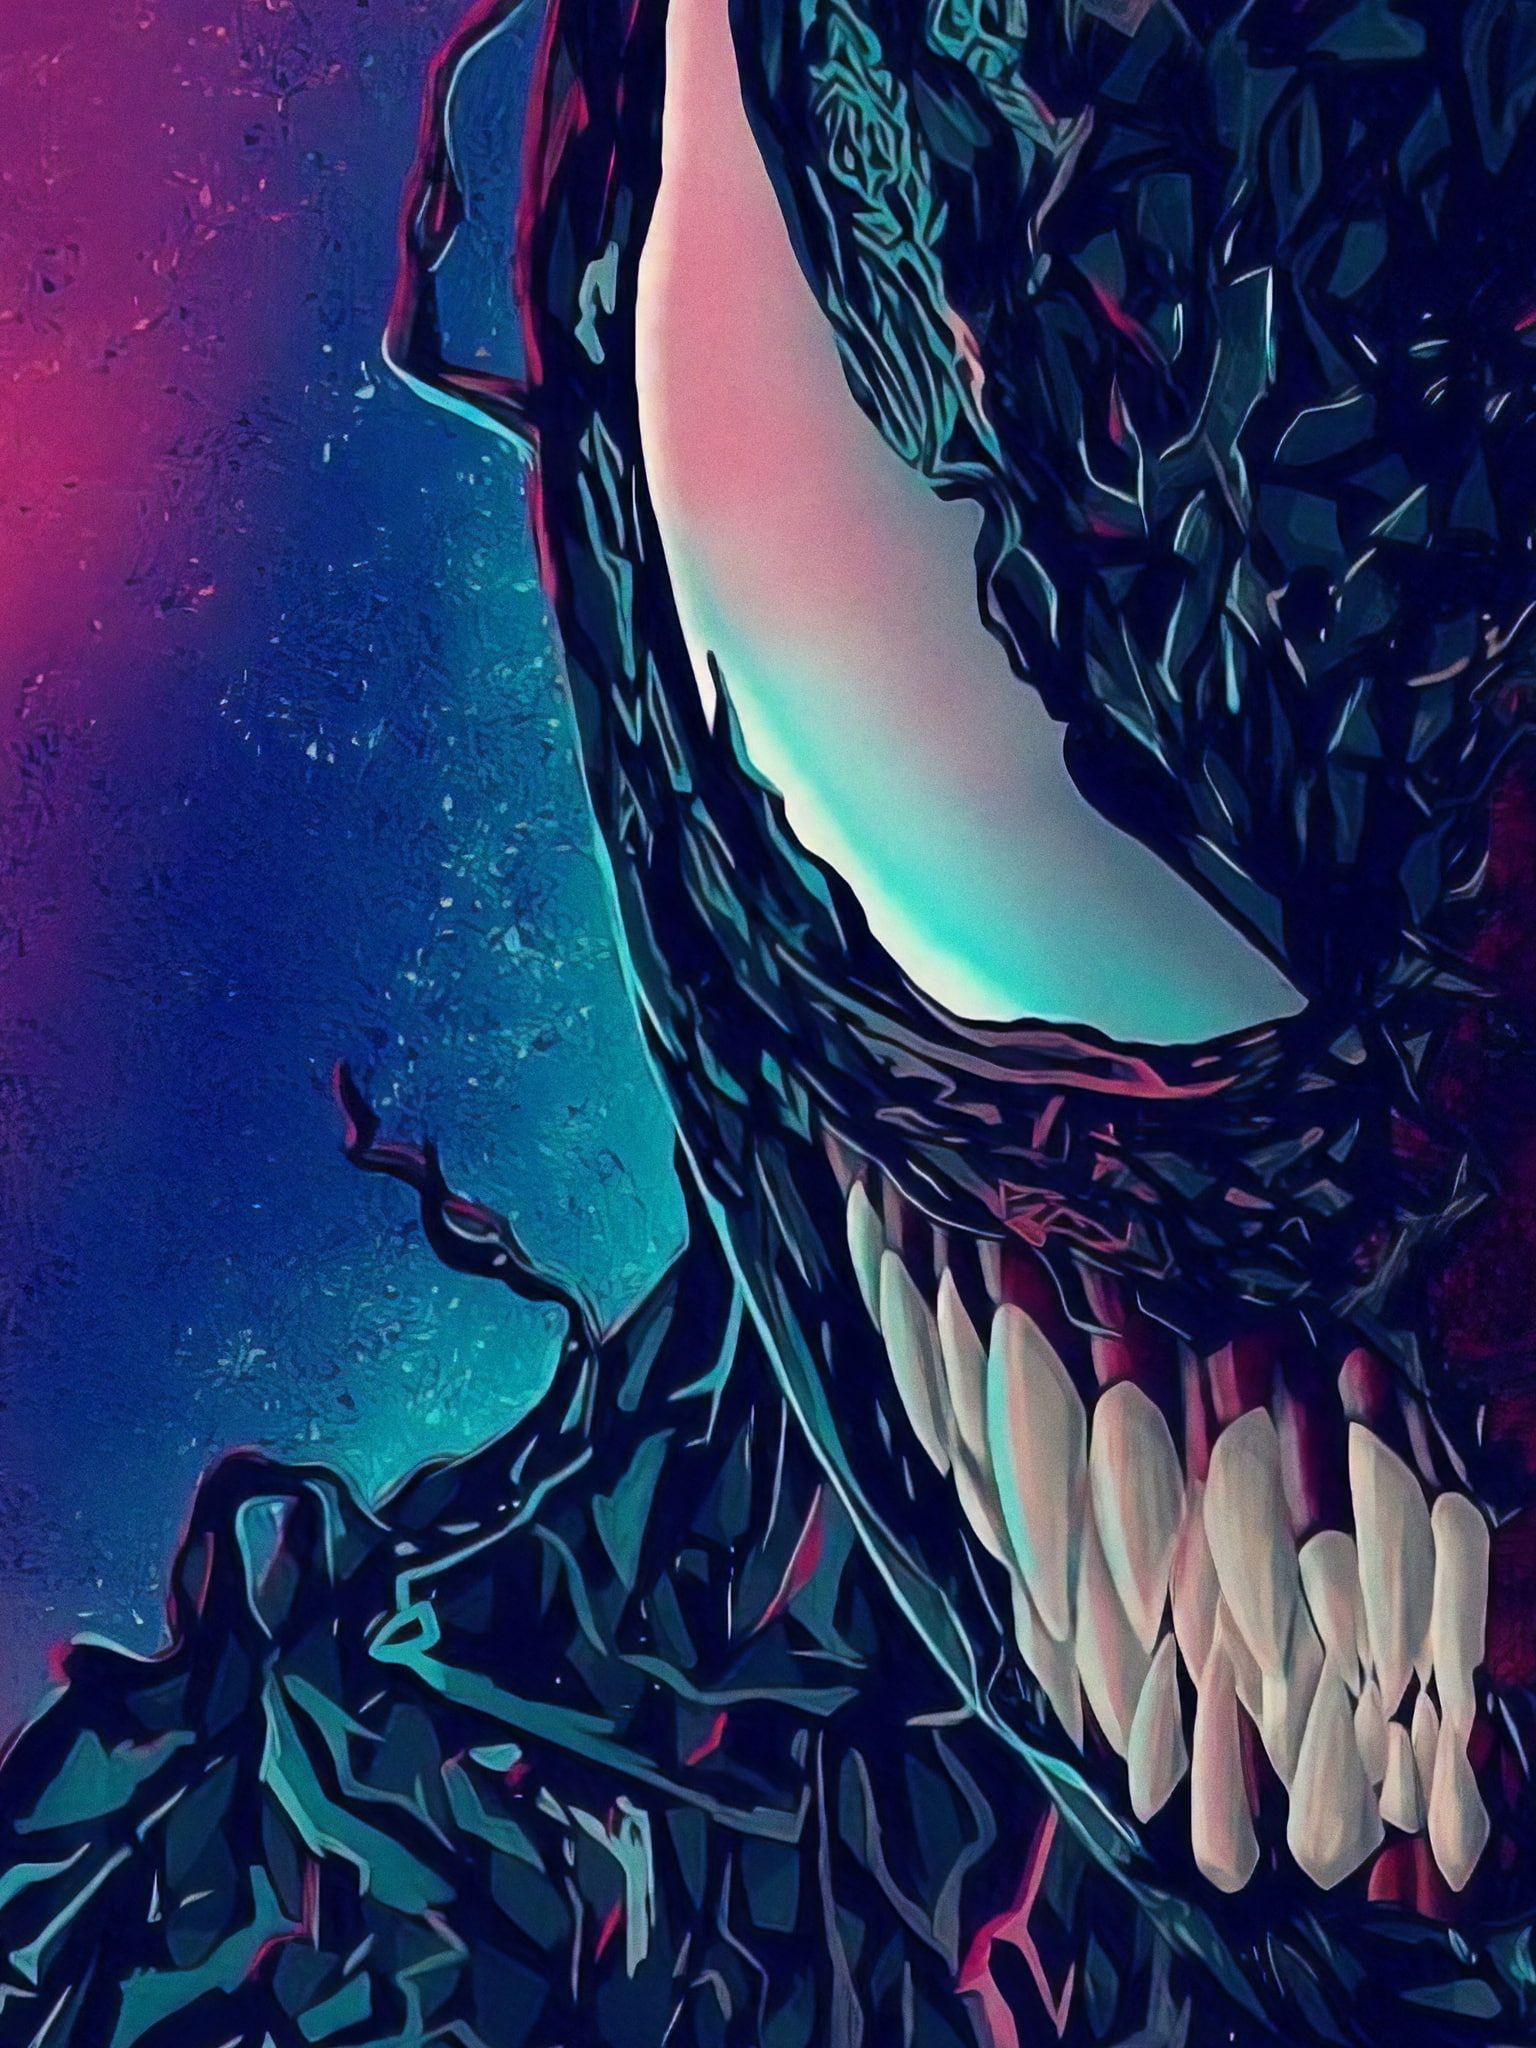 Venom Wallpaper APK for Android Download